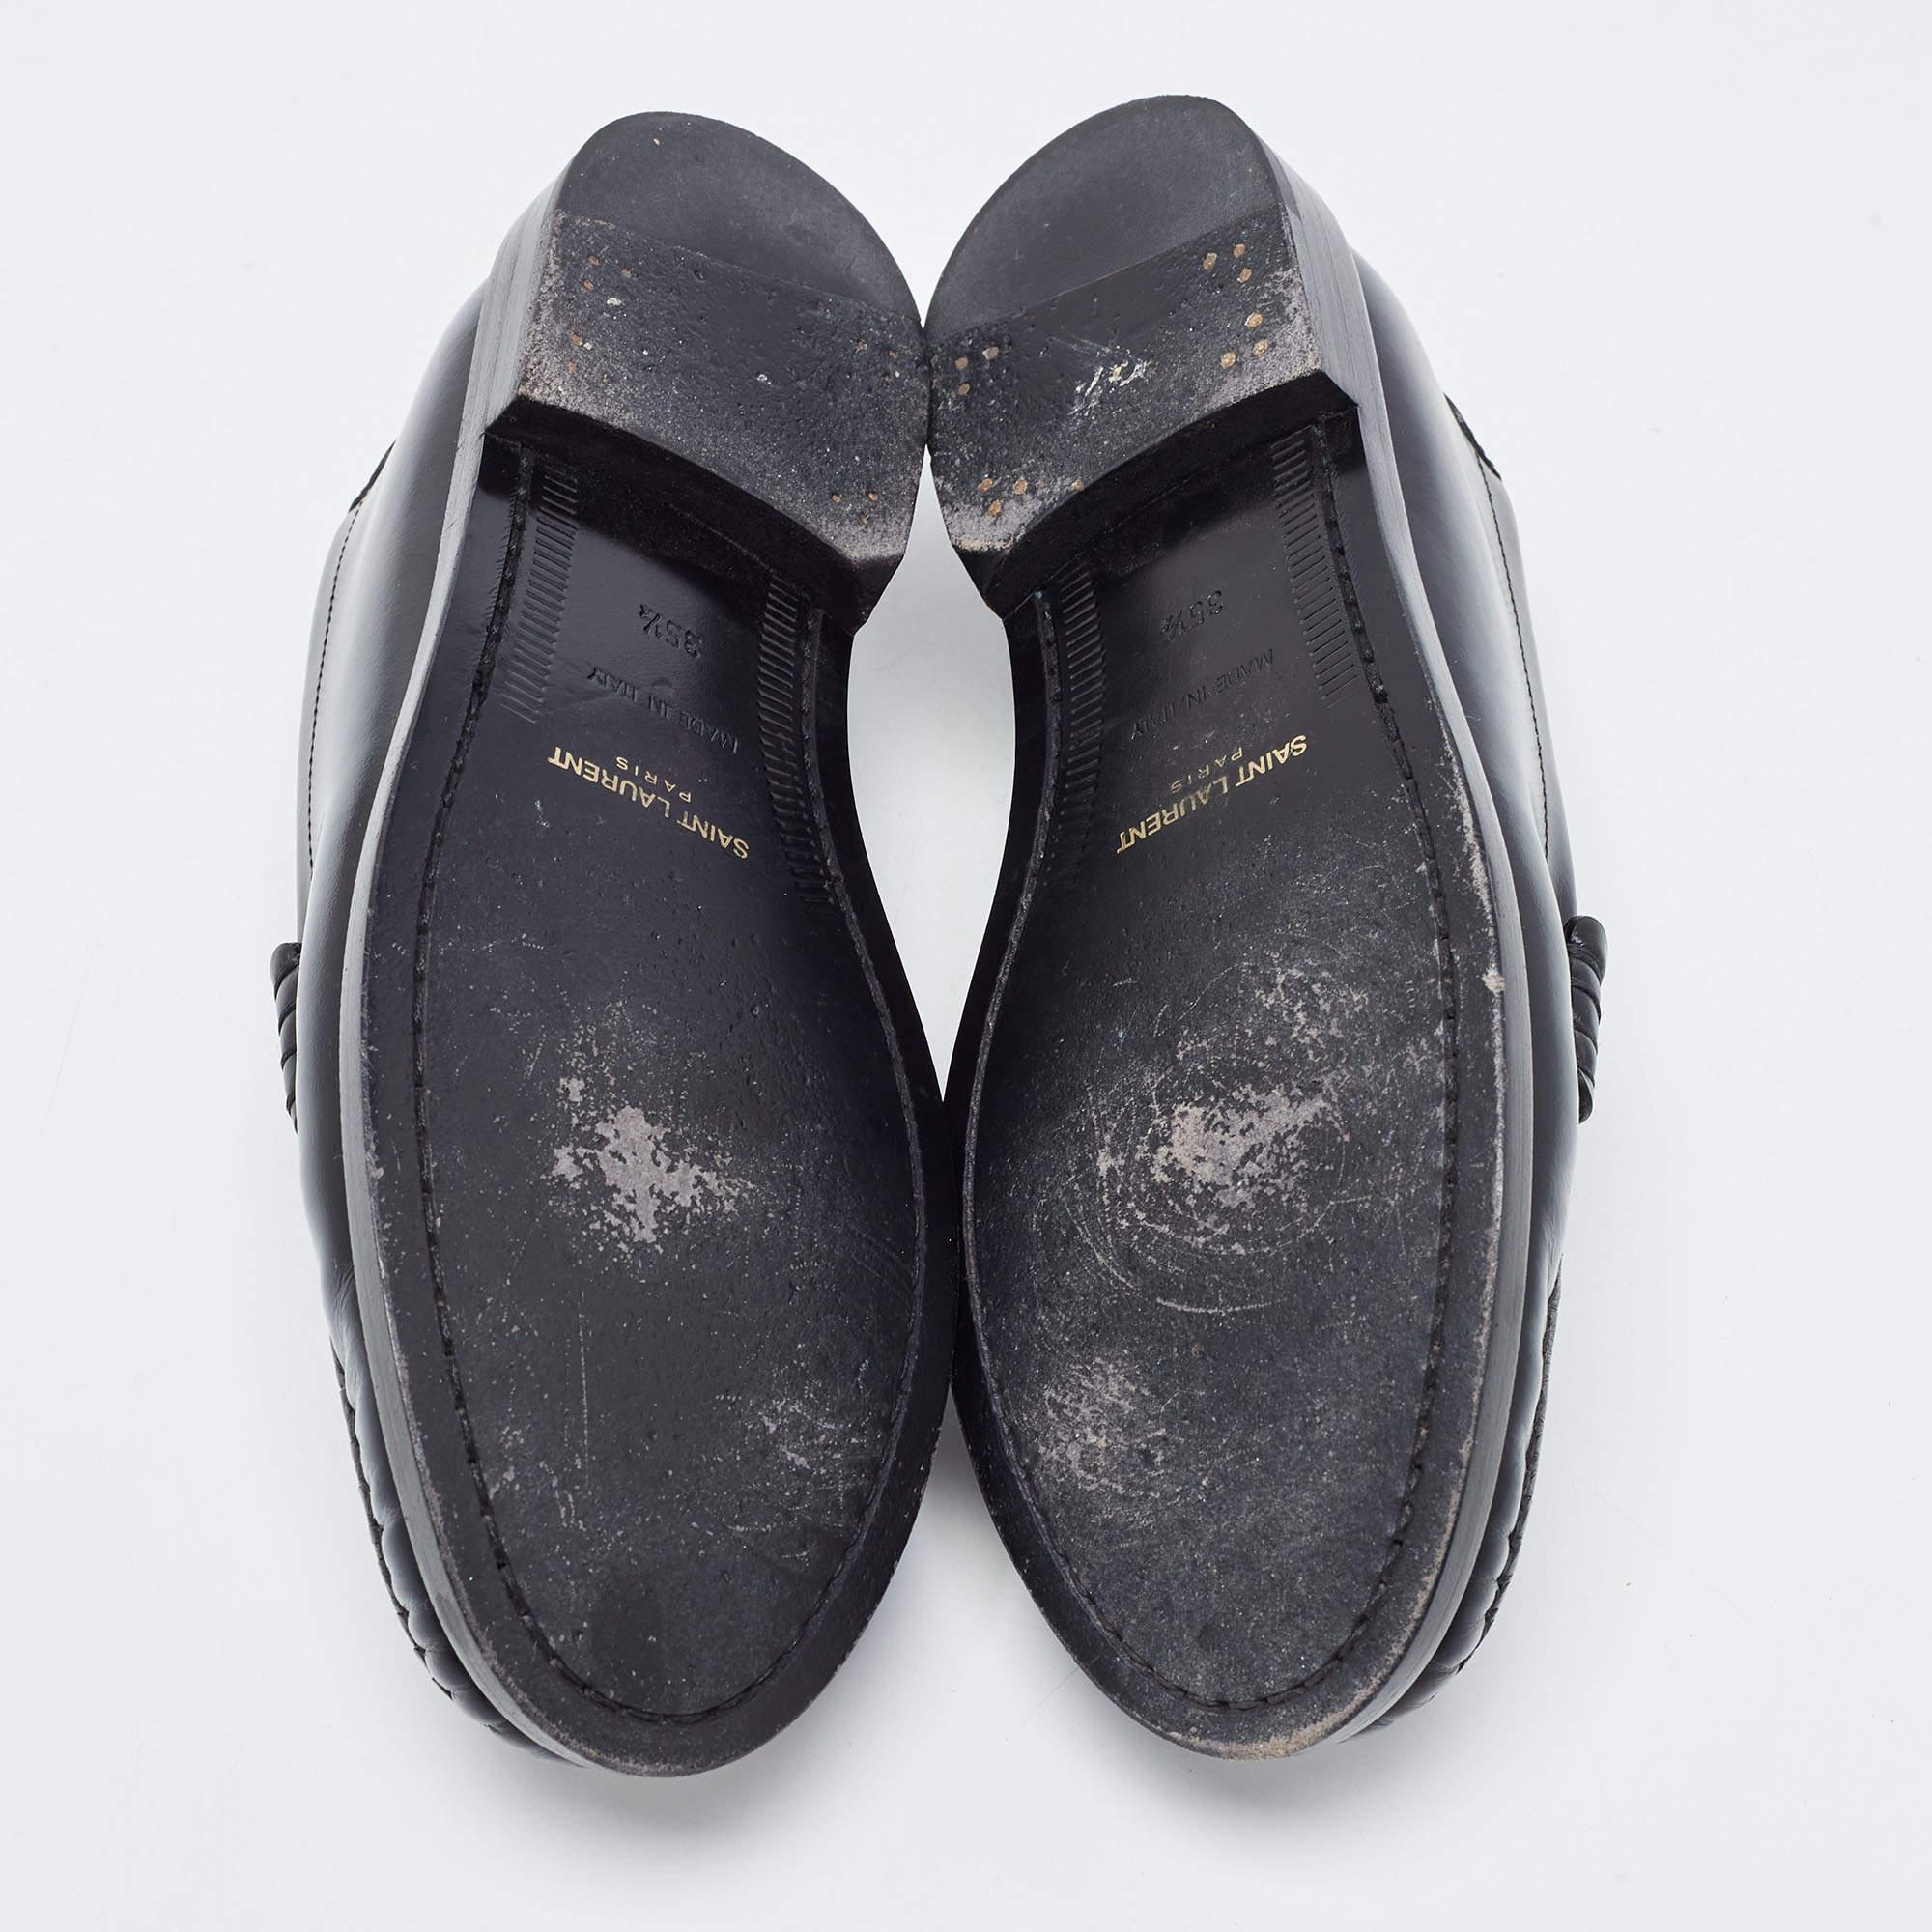 Saint Laurent Black Leather Slip On Loafers Size 35.5 3